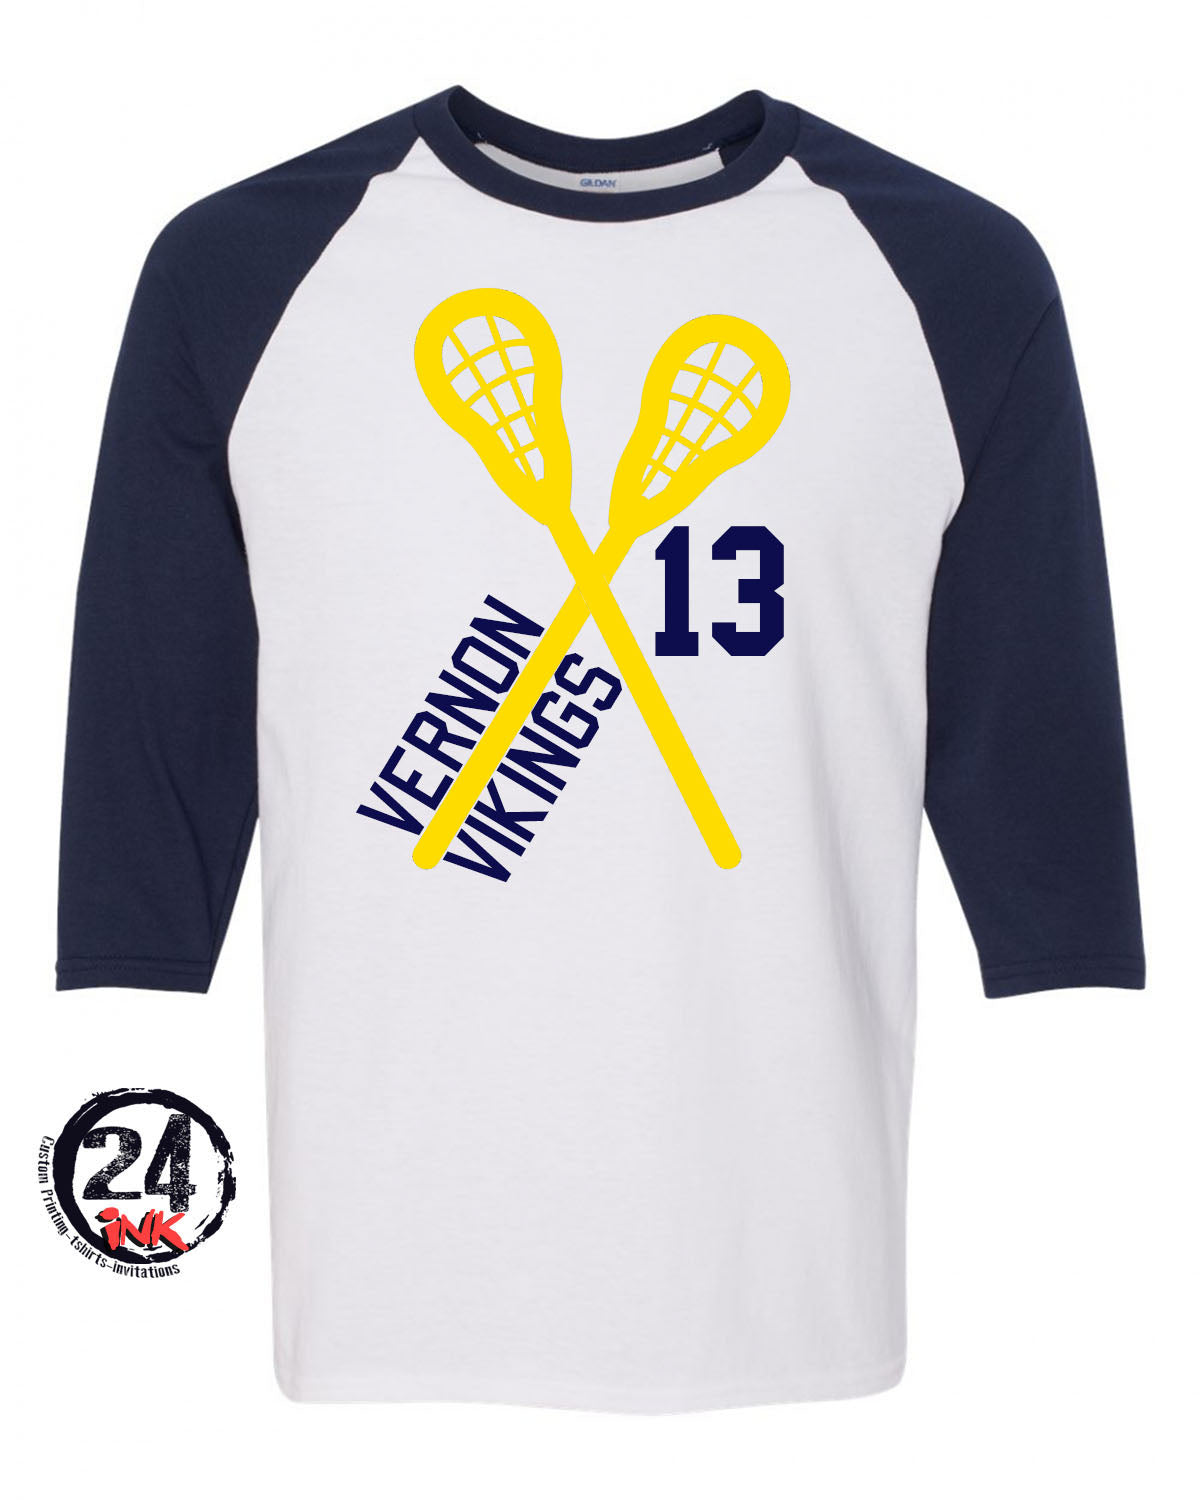 Lacrosse Sticks raglan shirt